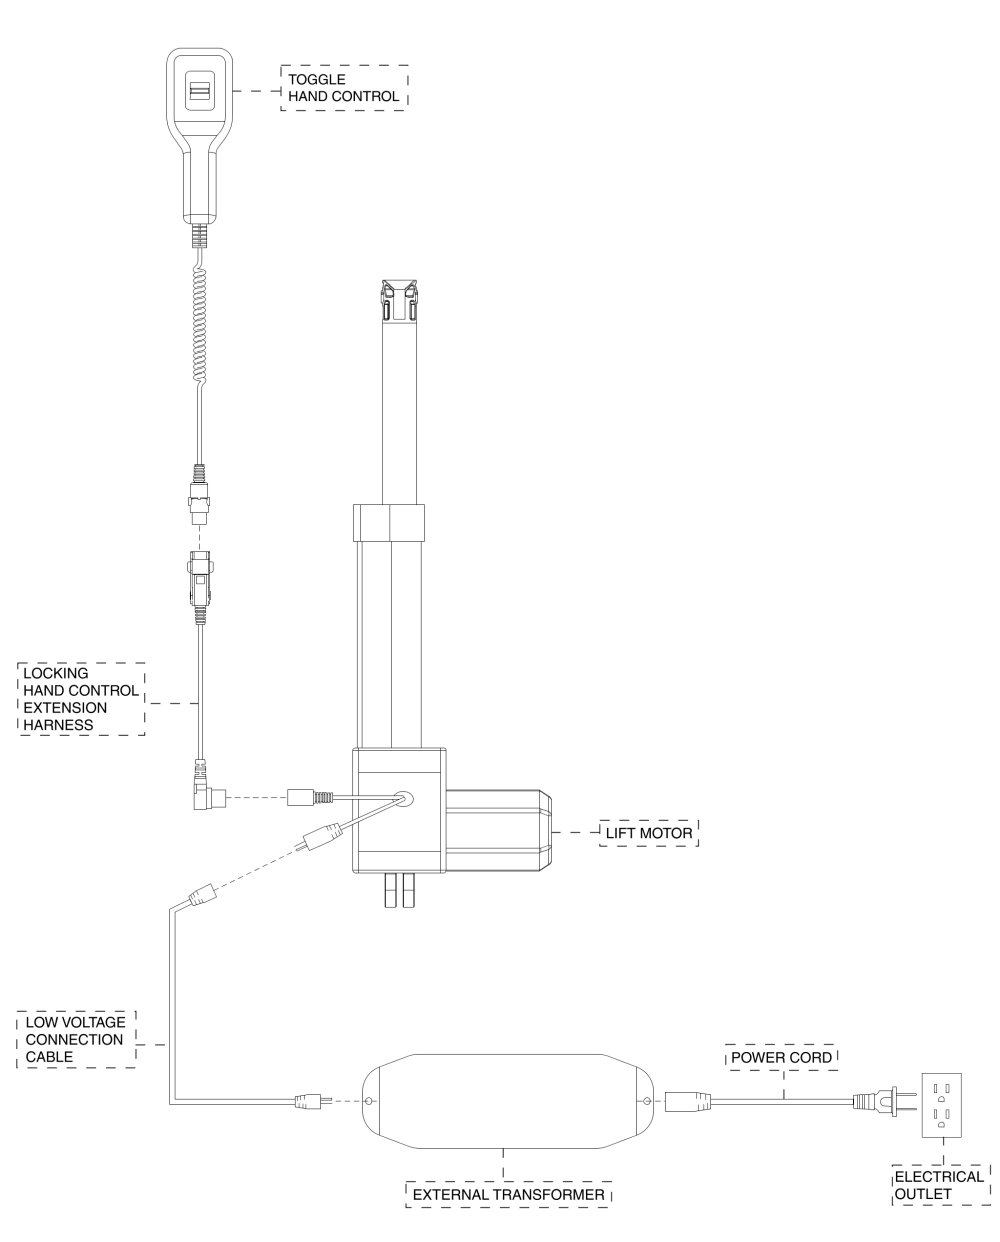 Standard, Toggle Hand Control parts diagram